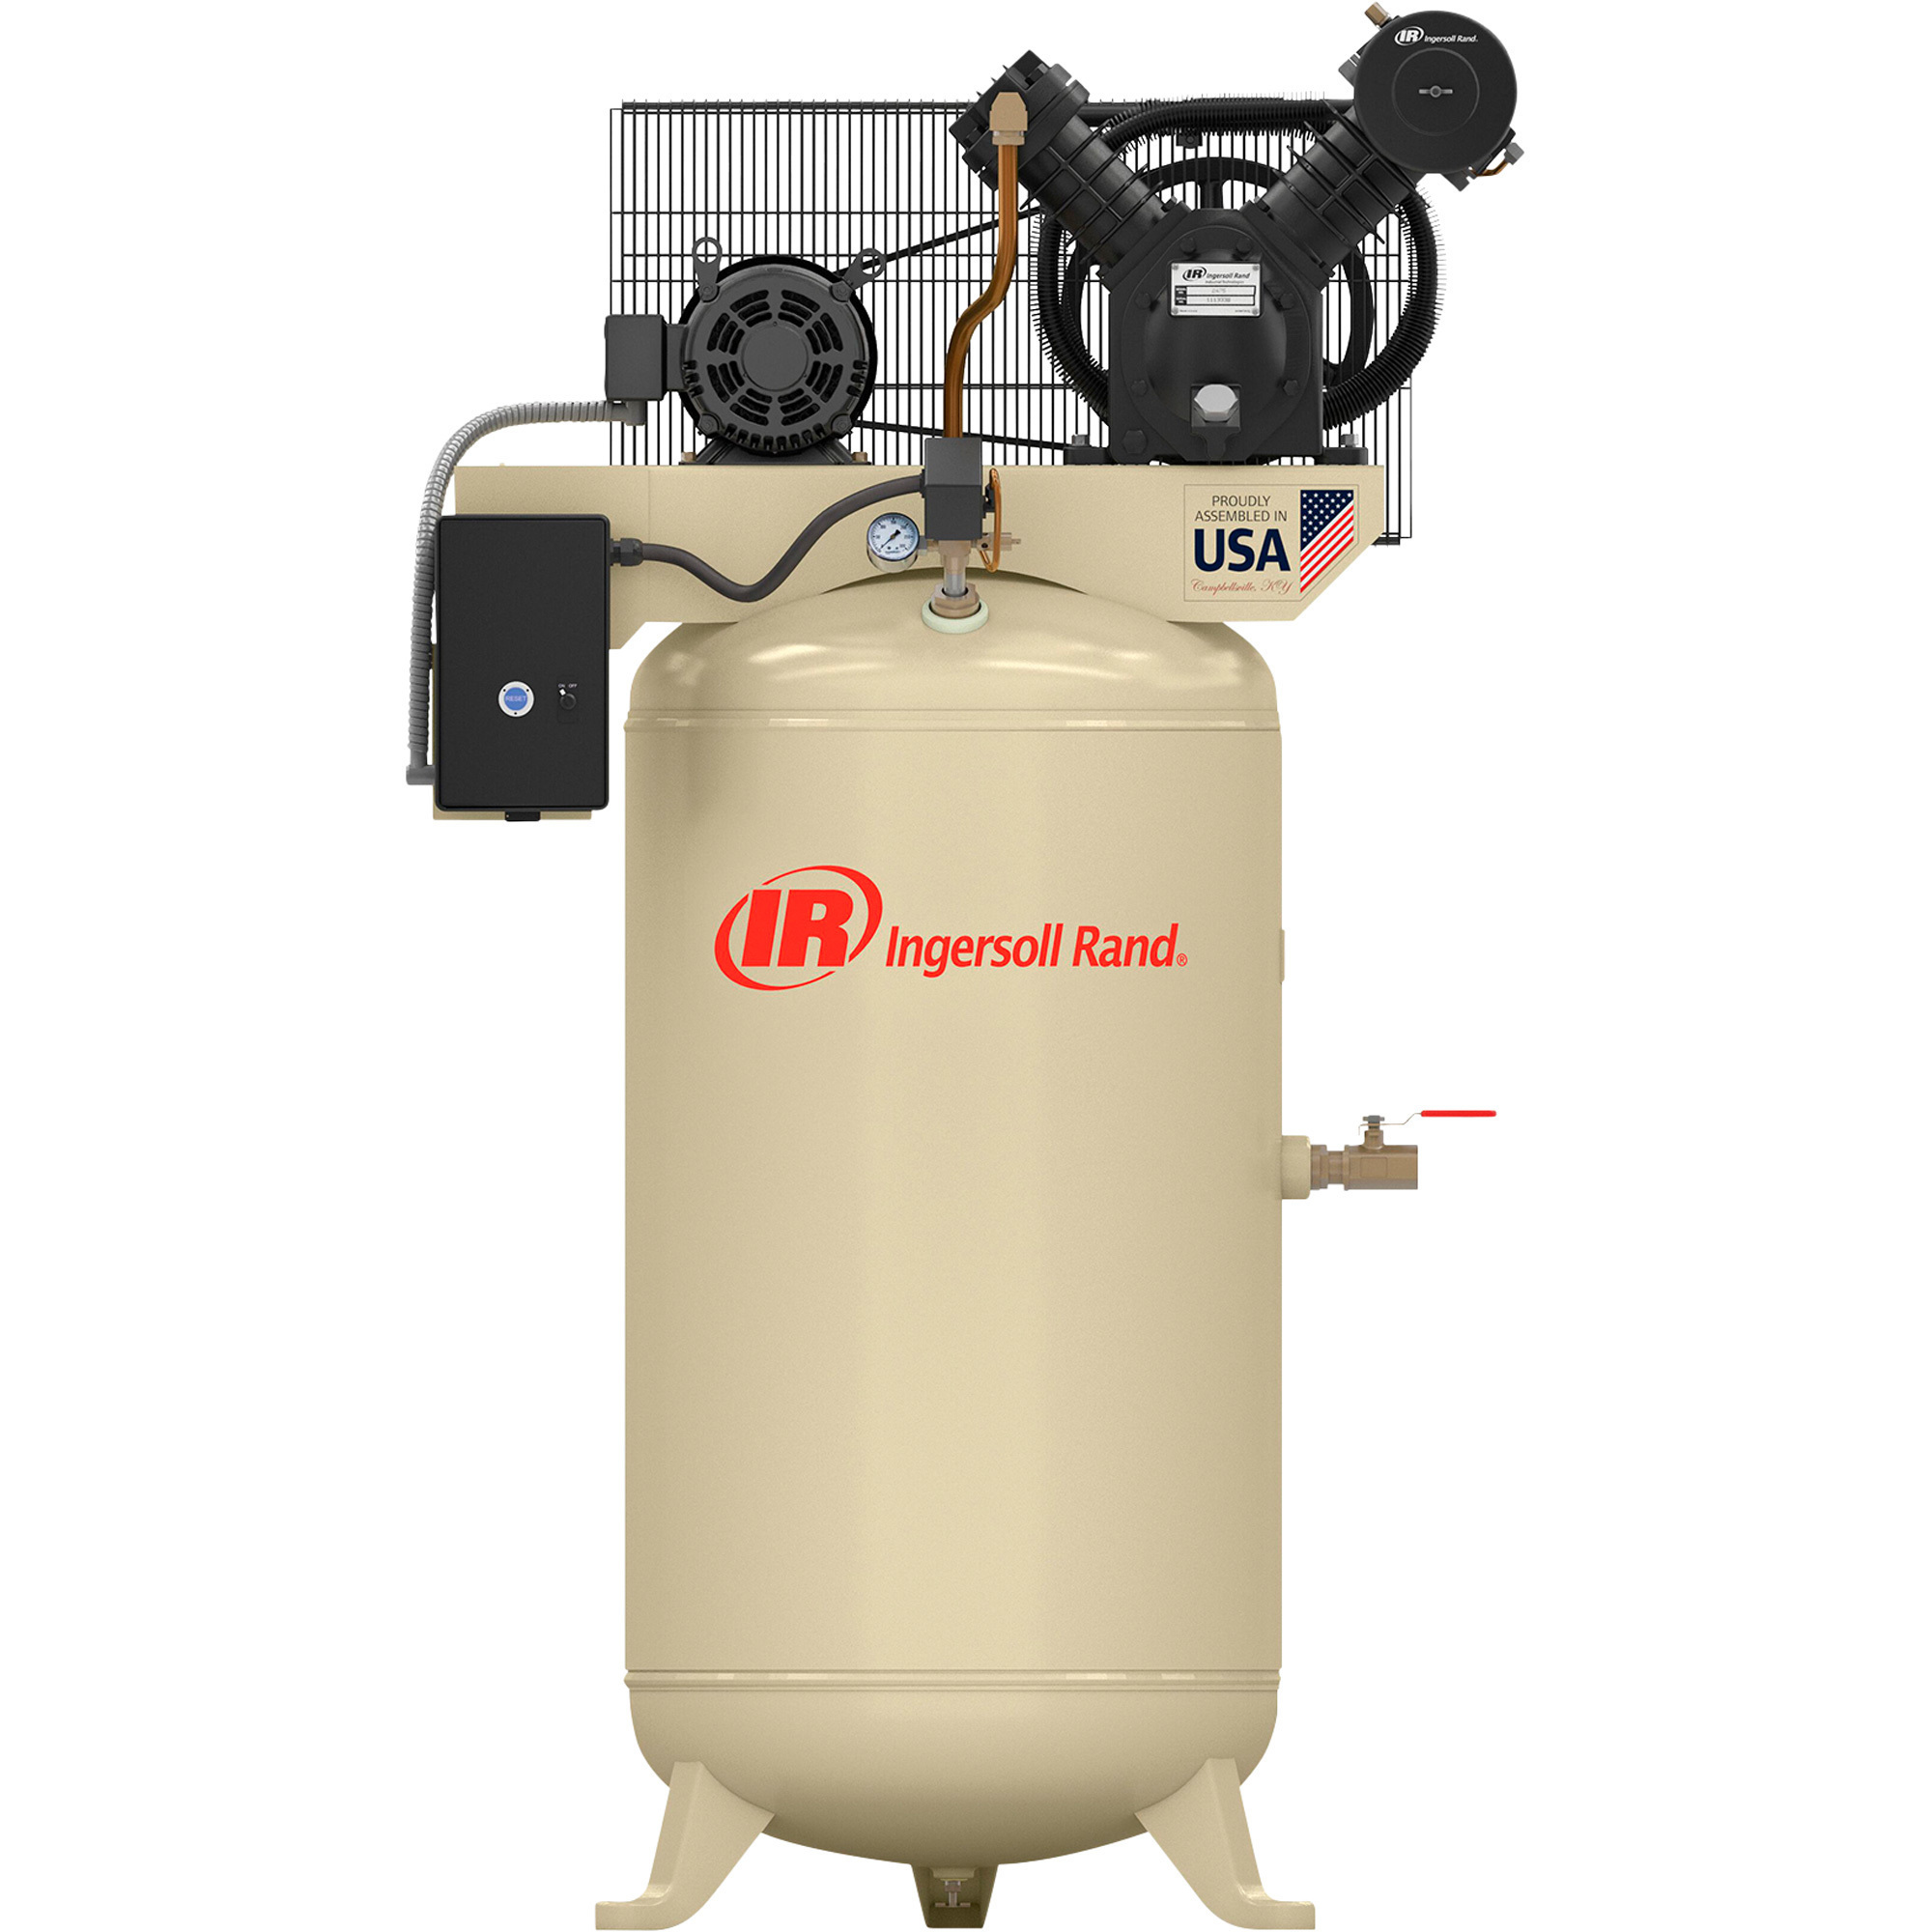 Ingersoll Rand Type-30 Reciprocating Air Compressor, 5 HP, 230 Volt 3 Phase, 80 Gallon, Model 2475N5-V